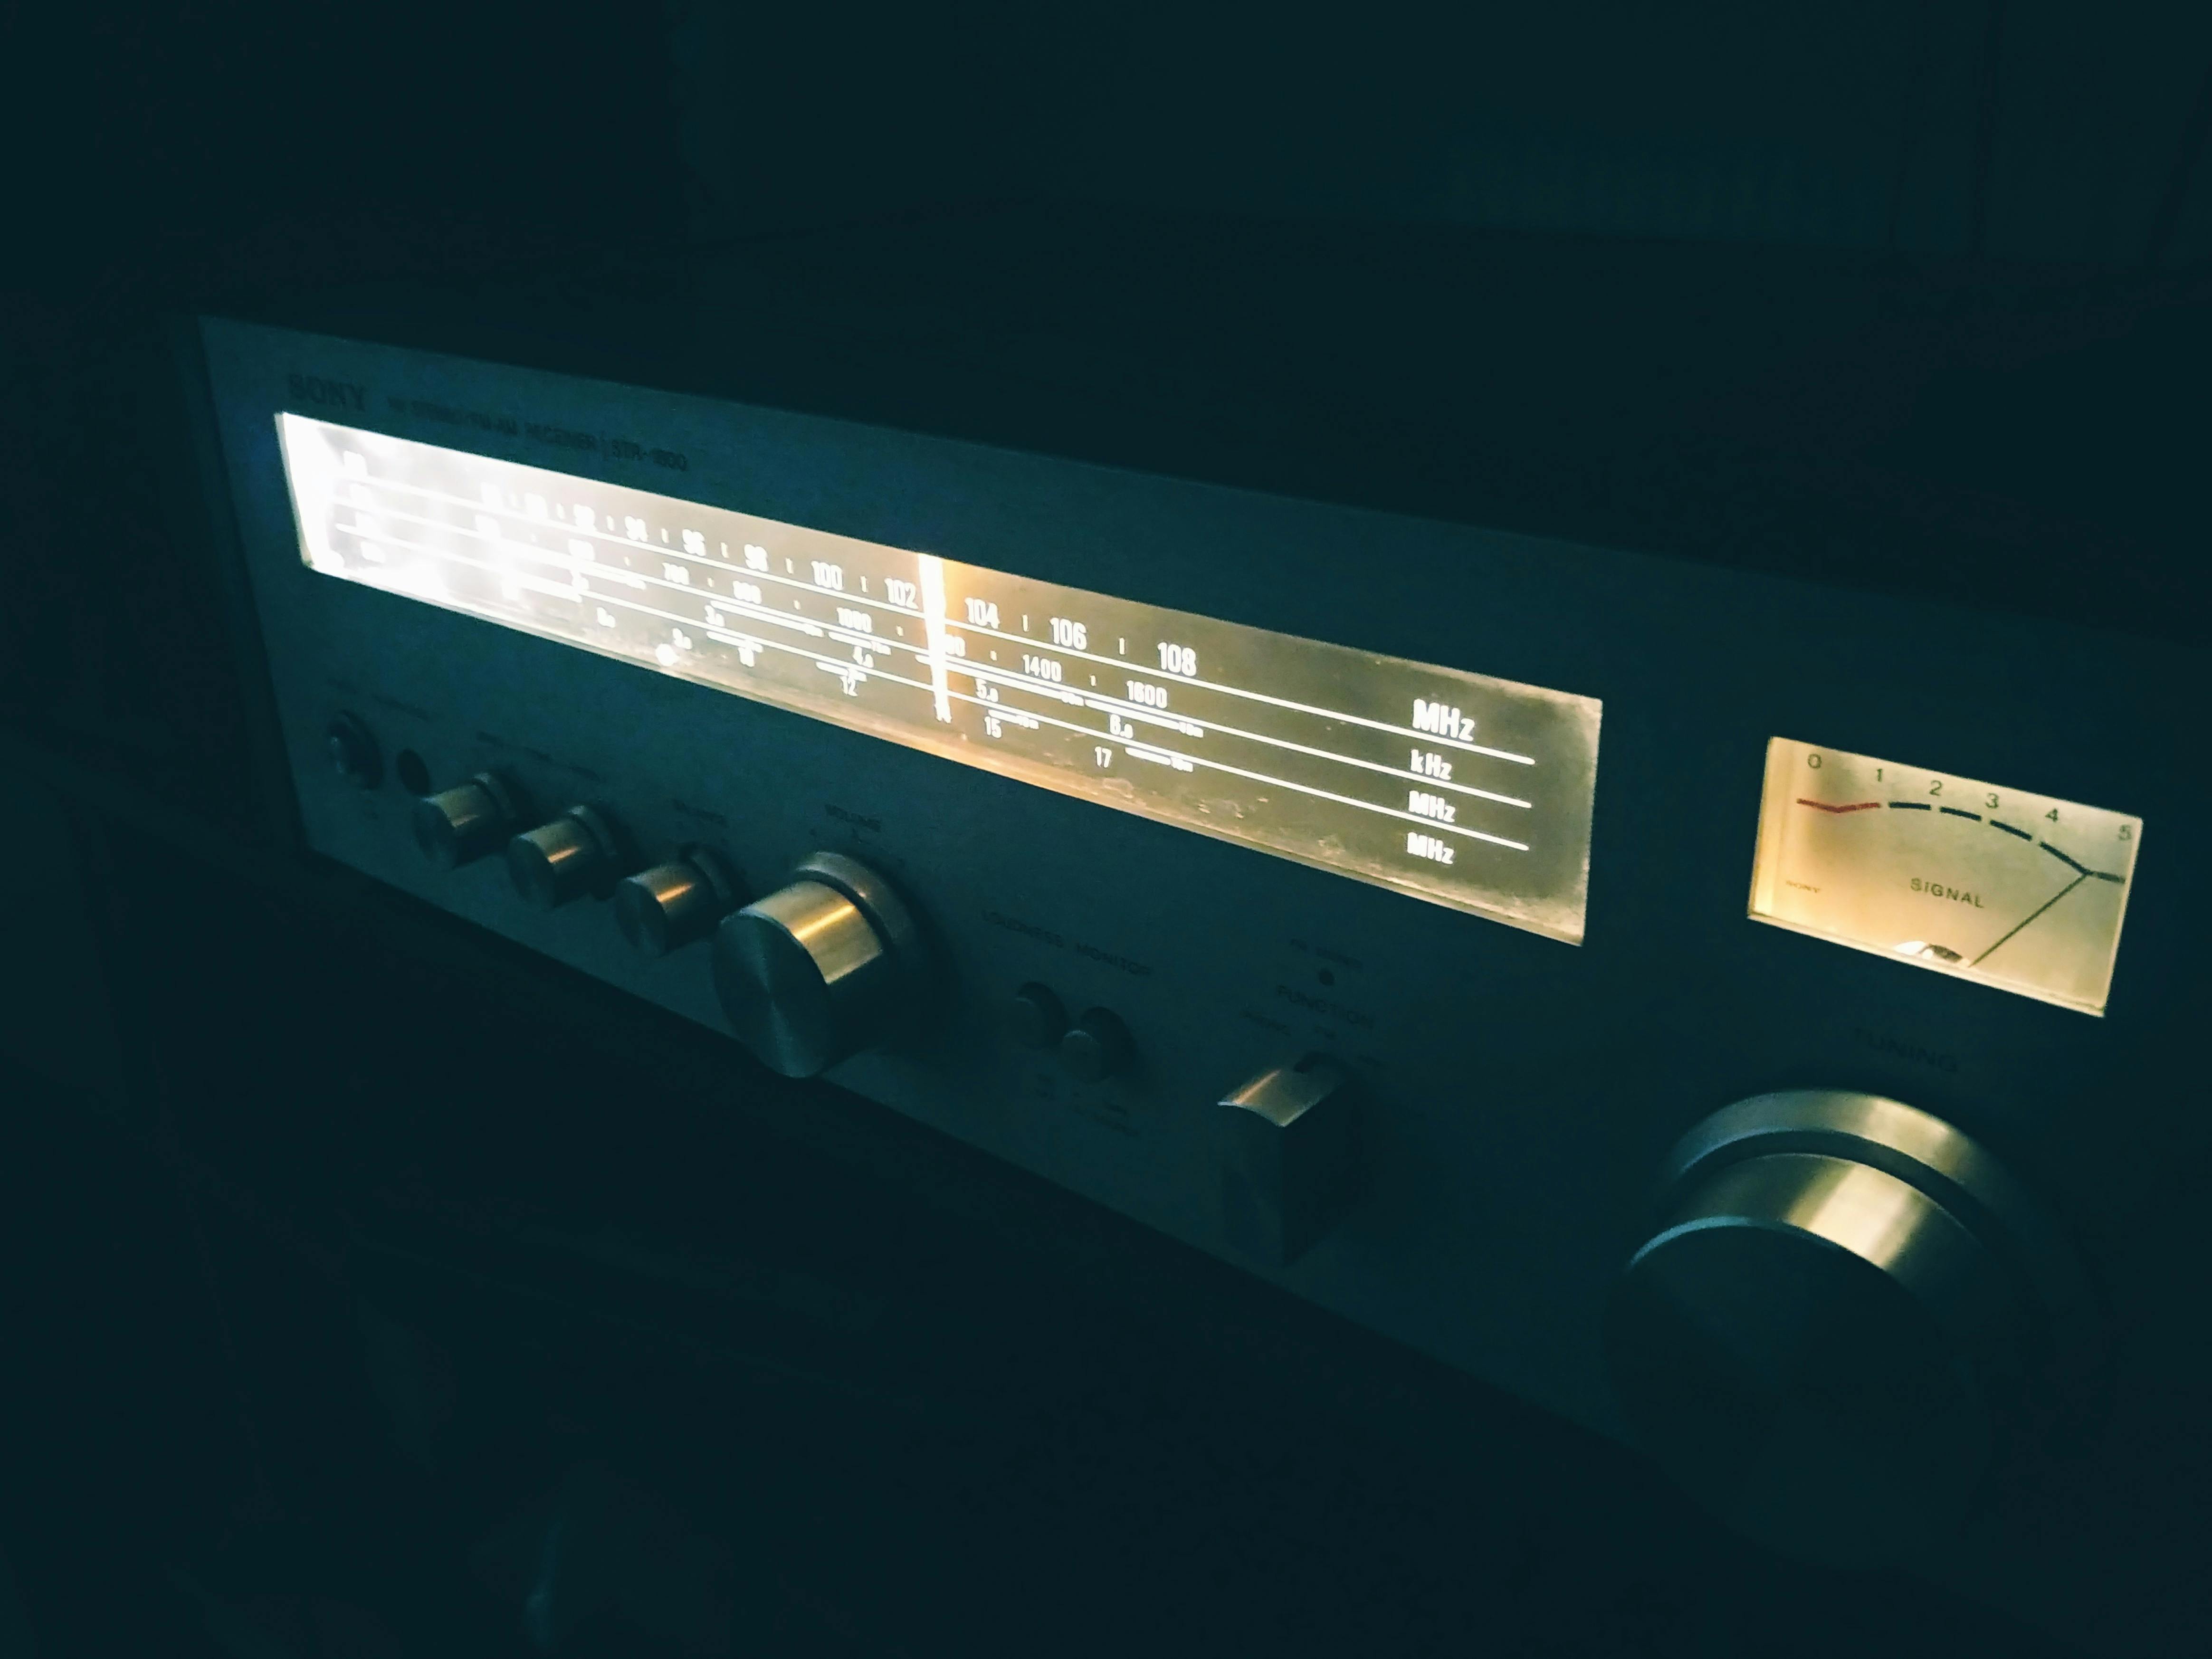 Free stock photo of audio system, cassette player, fm radio